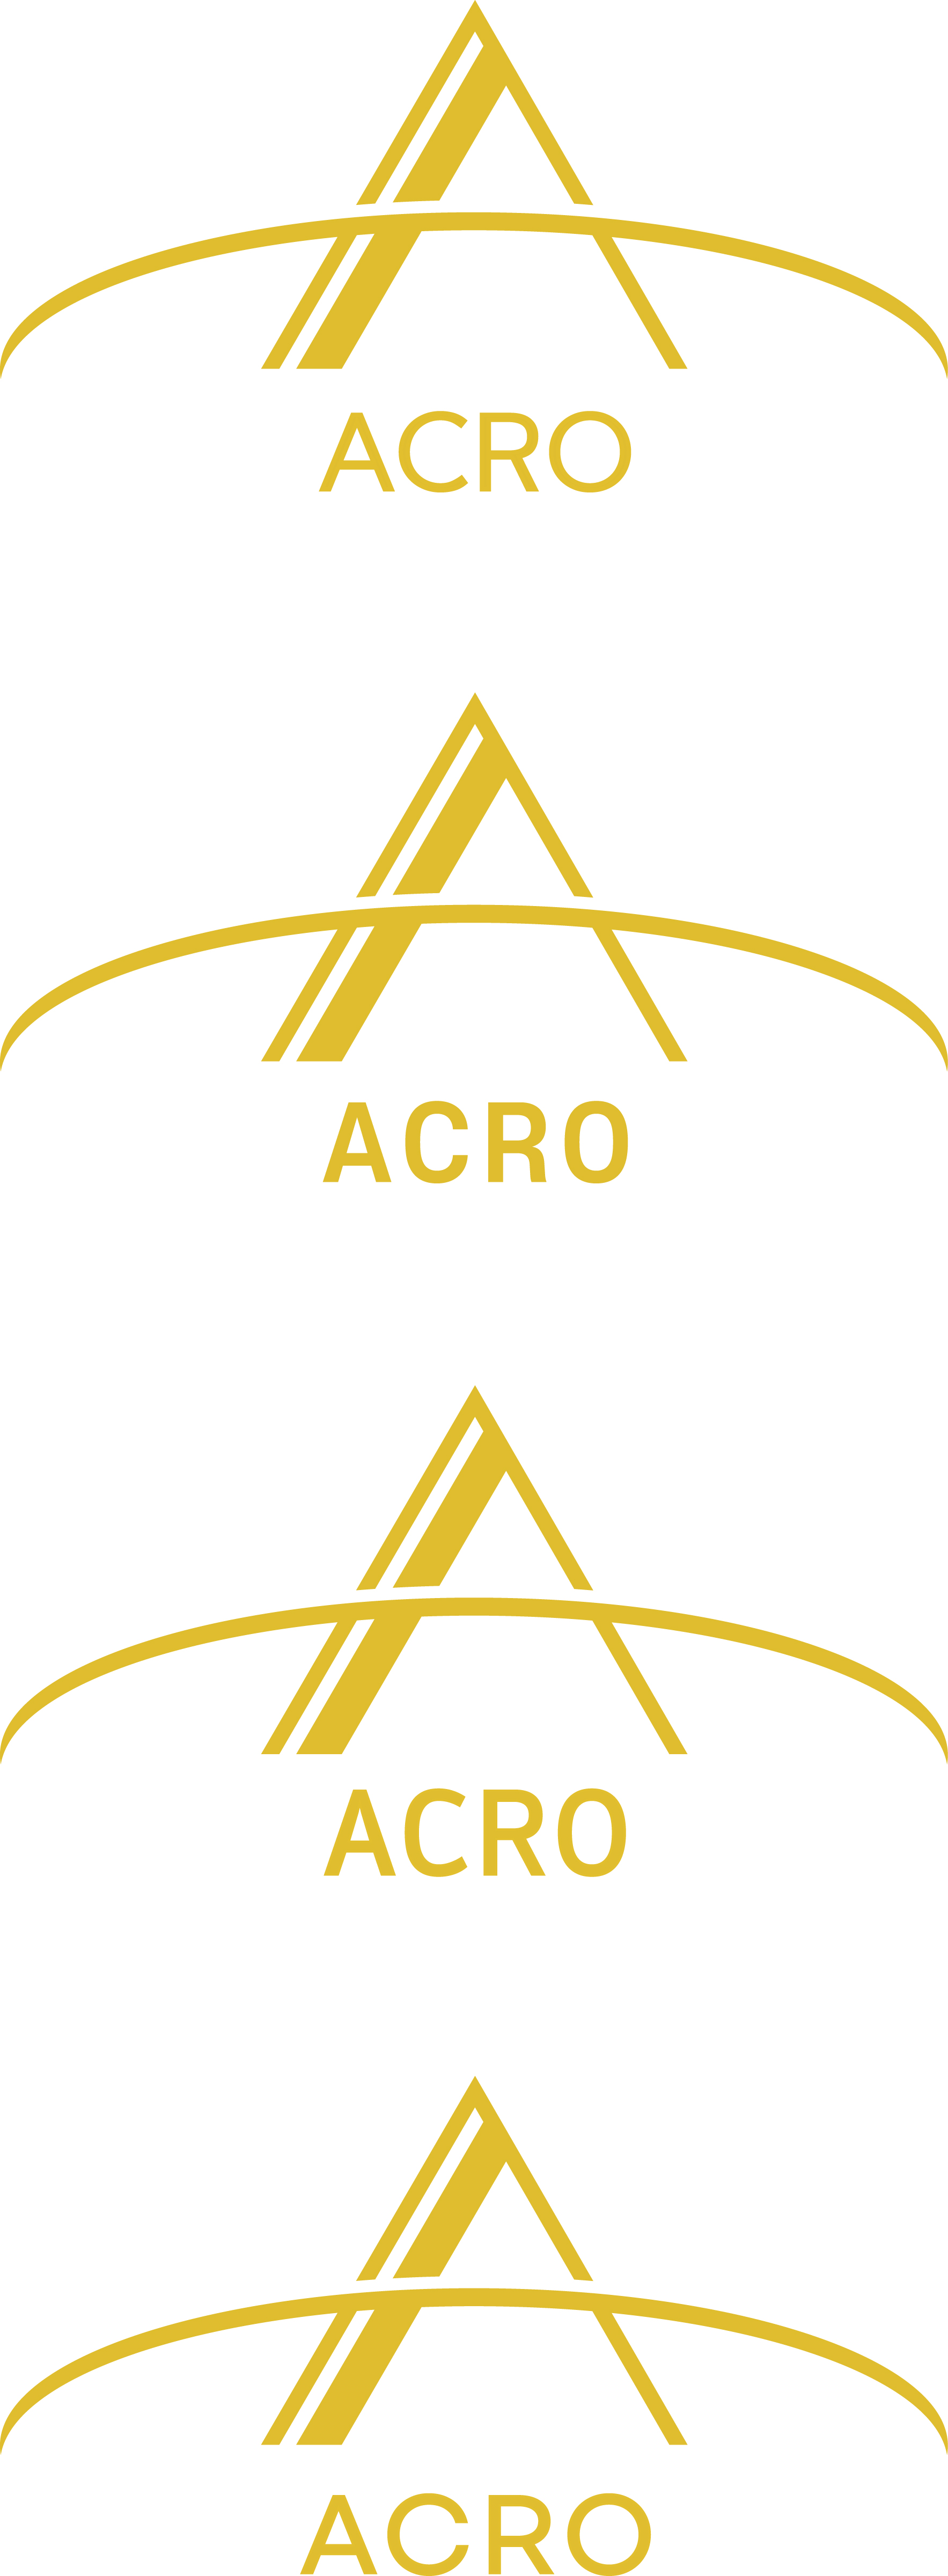 acro trading logo image